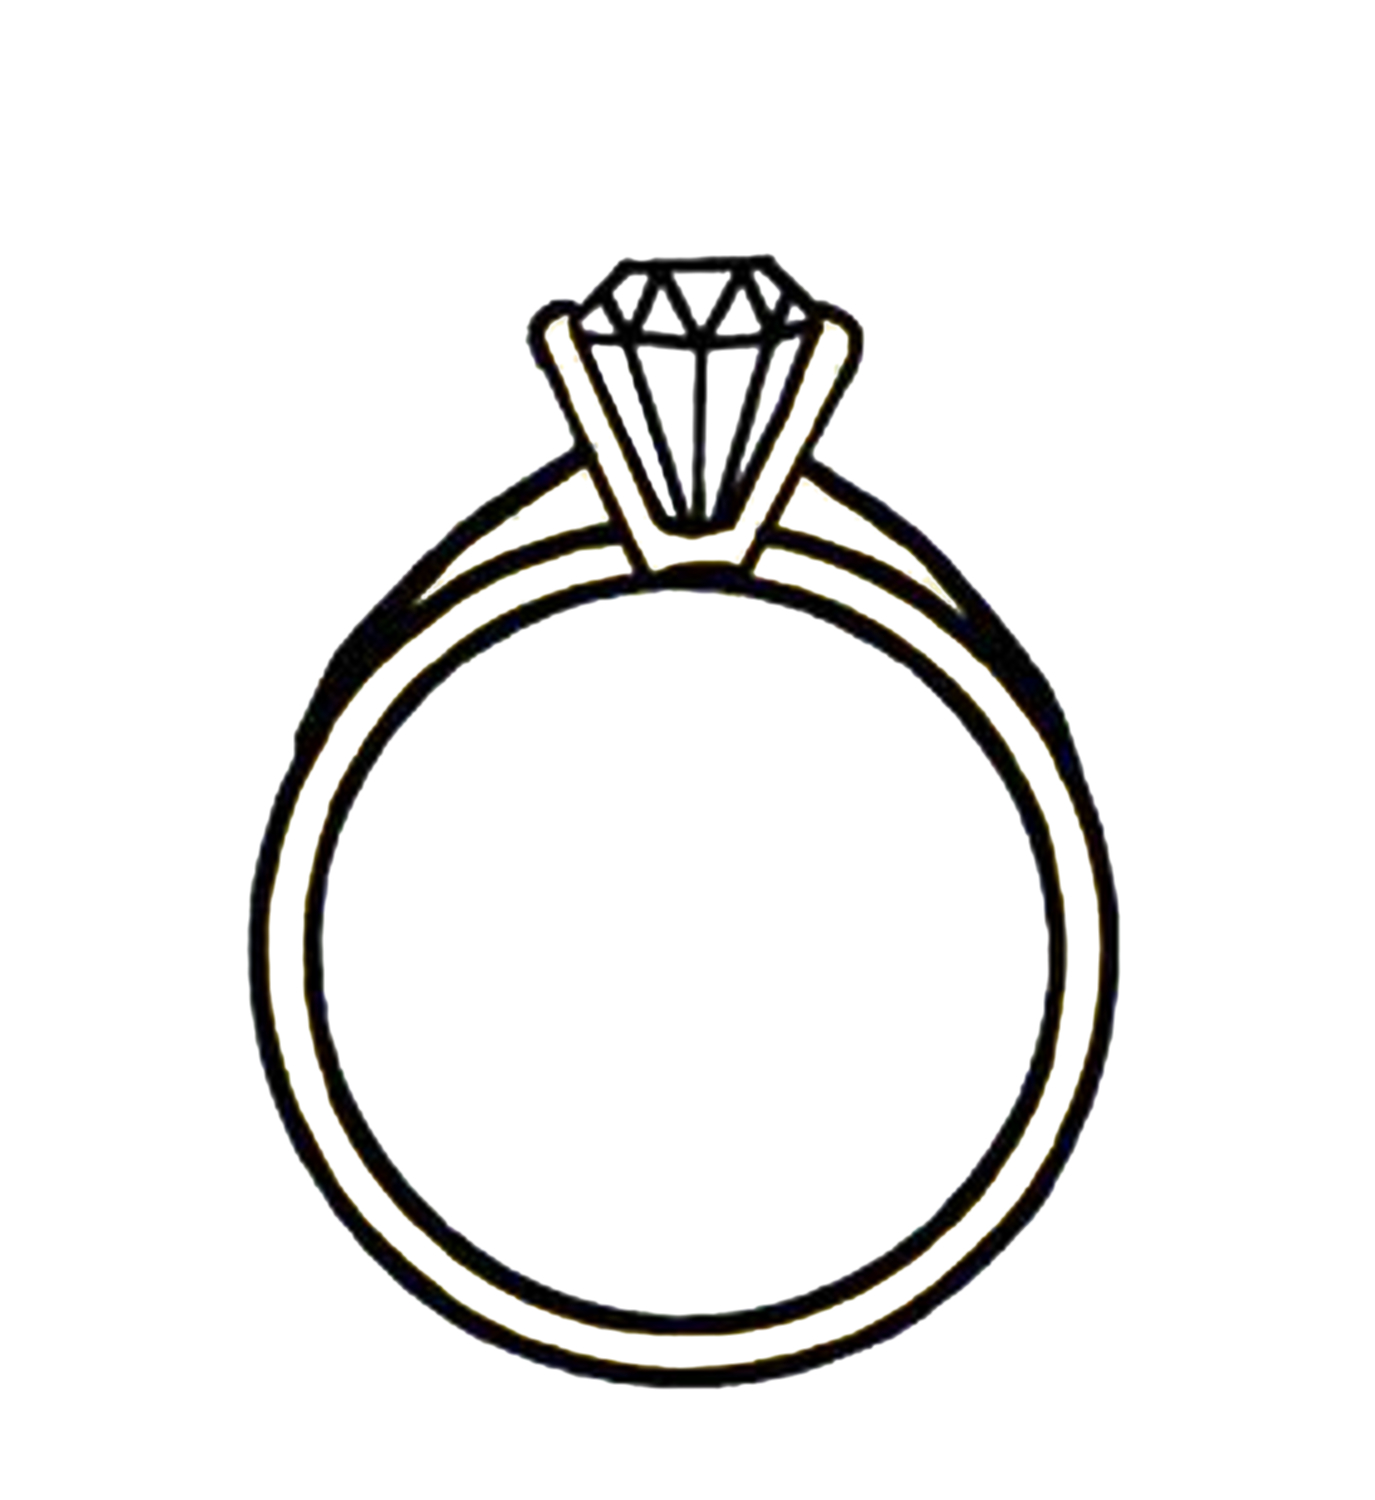 Rings clipart #18, Download drawings